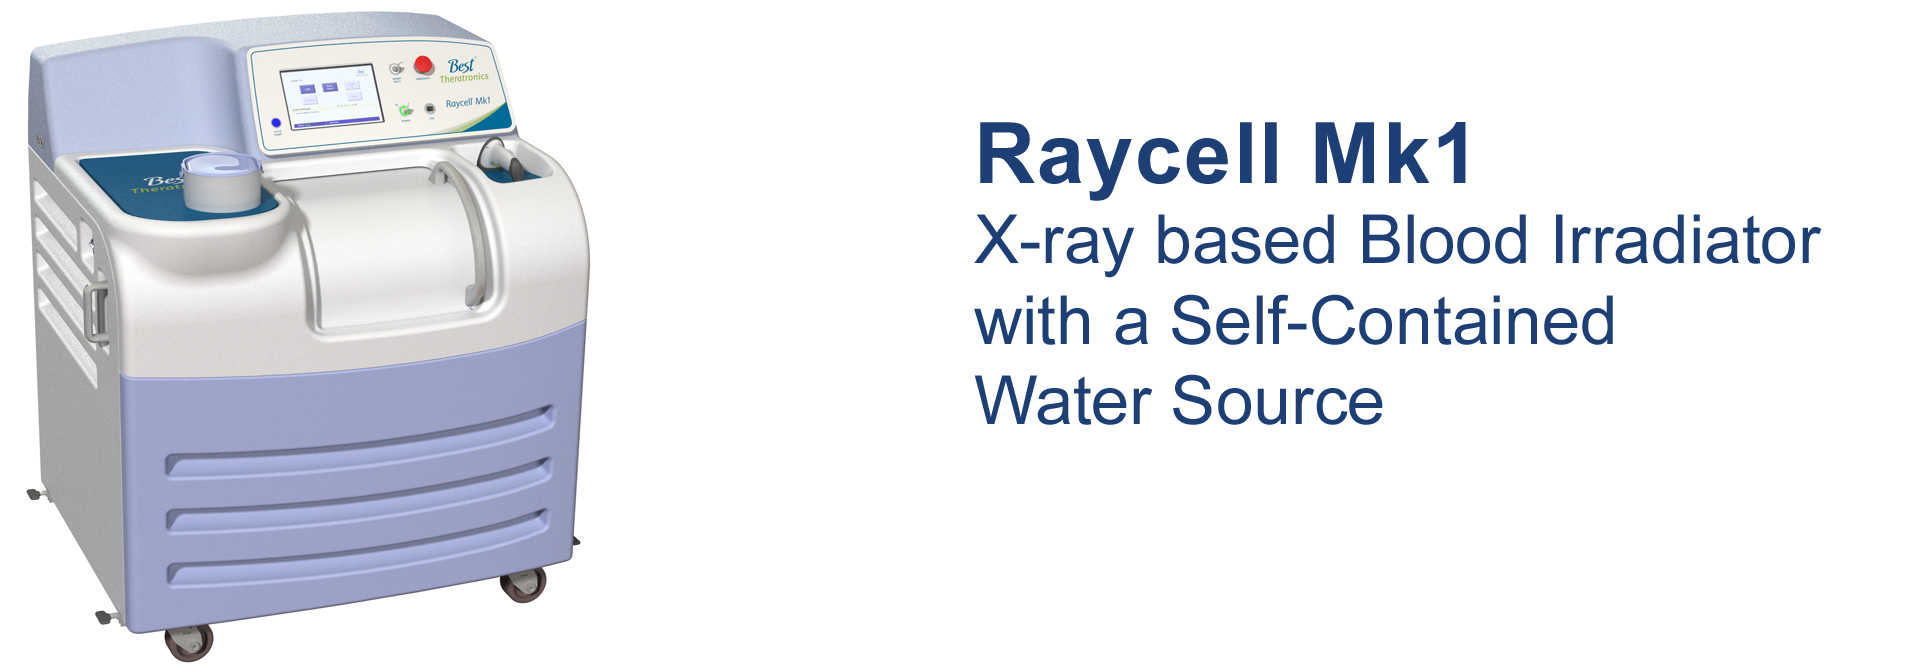 Raycell Mk1